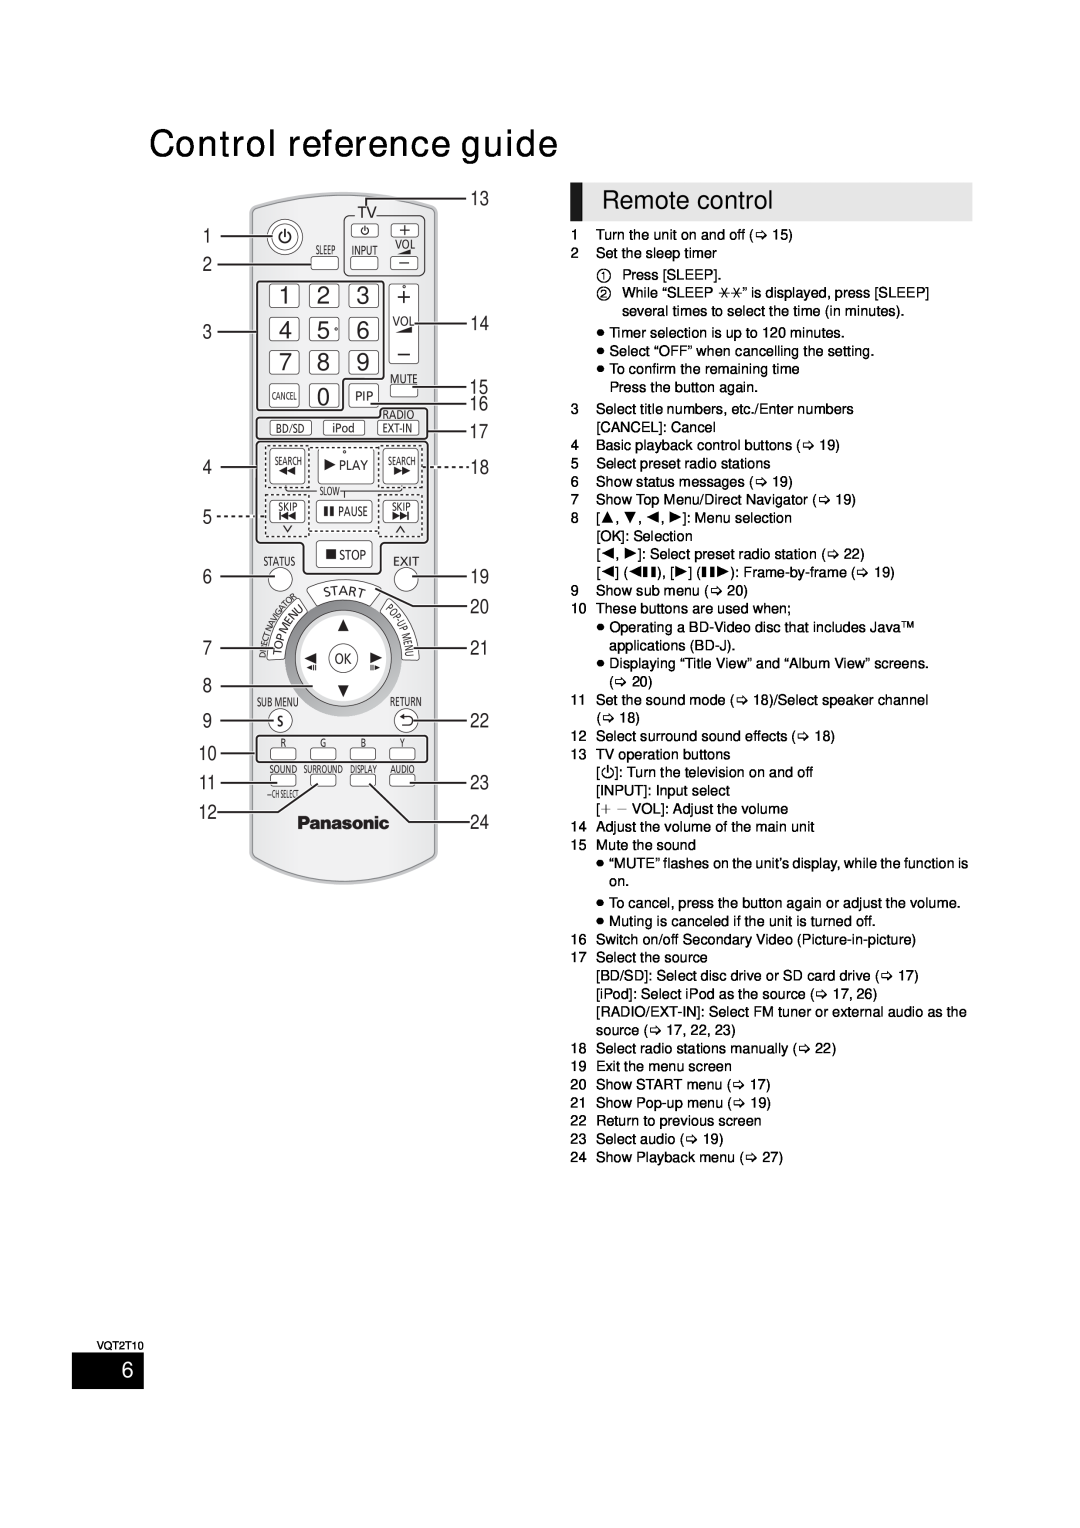 Panasonic SC-BT228, VQT2T10 warranty Control reference guide, Remote control, 1 2 4 